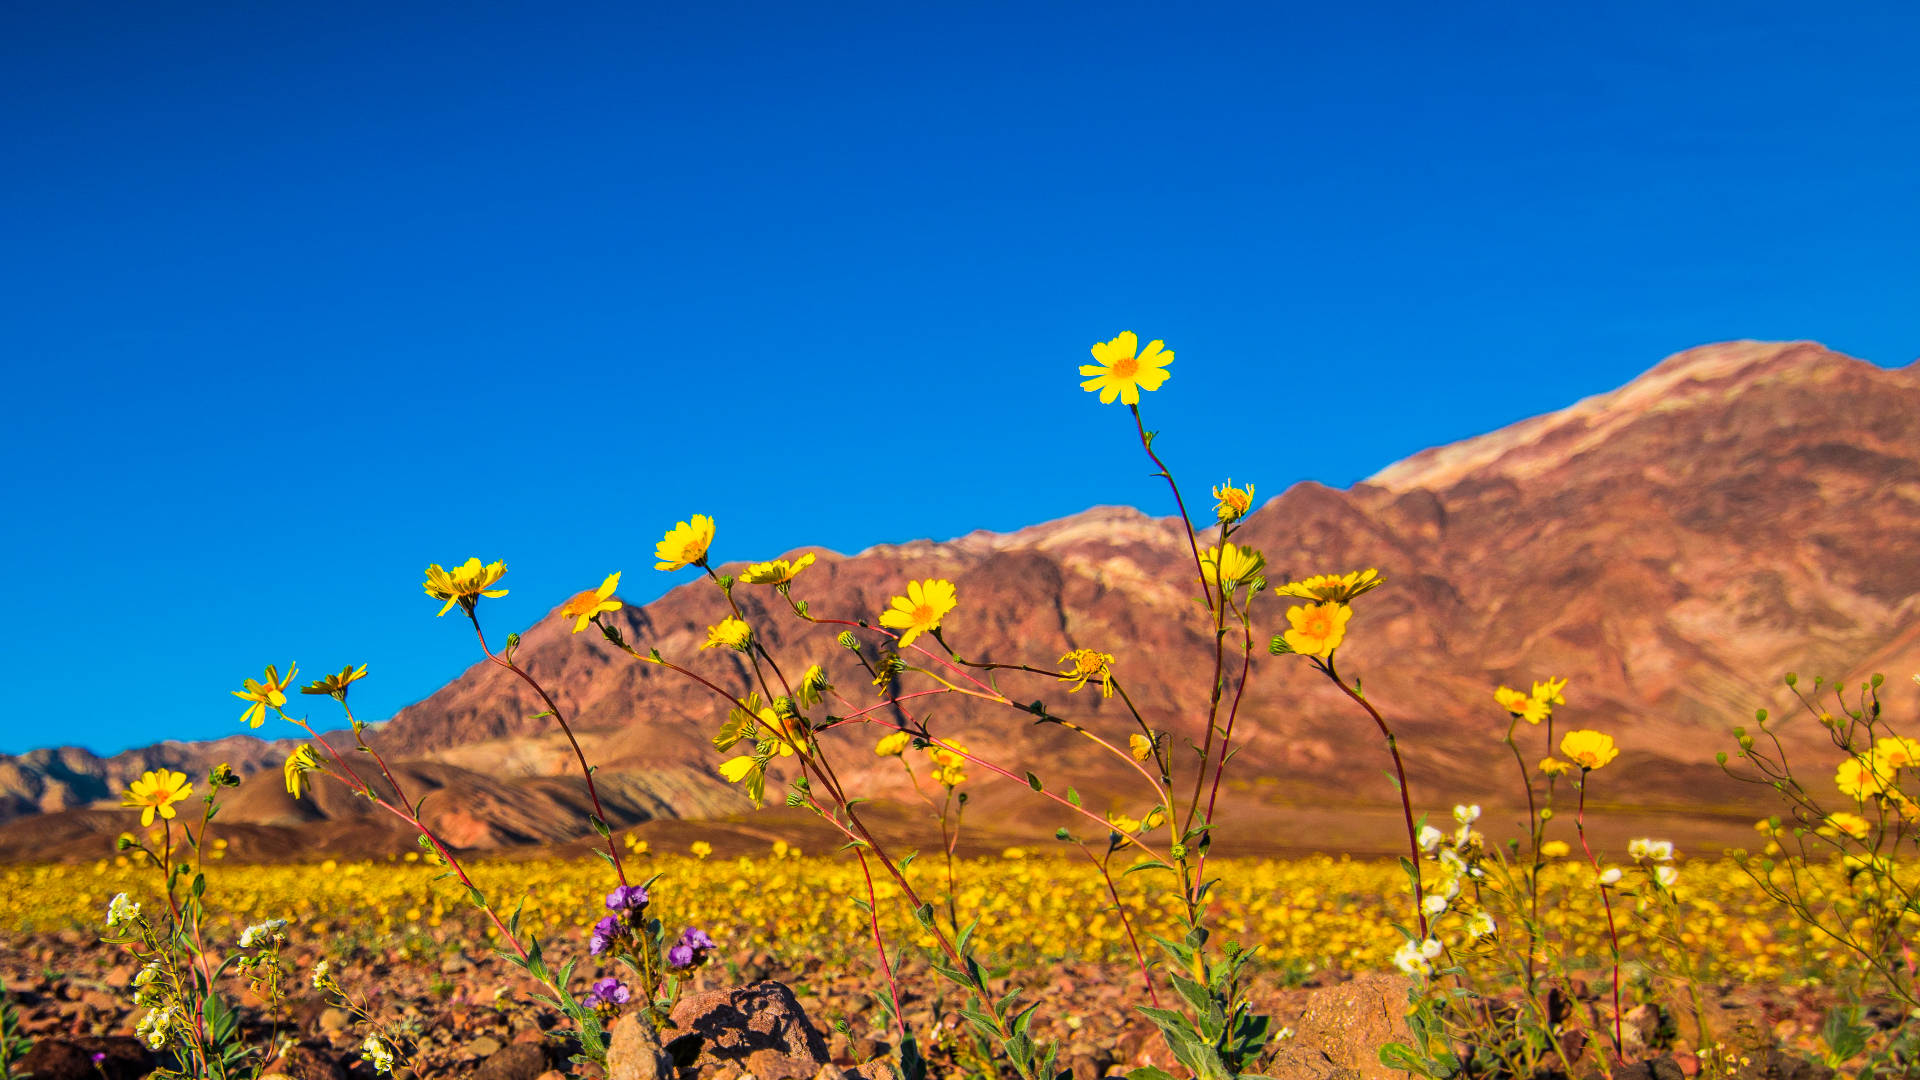 Death Valley Yellow Flowers skaber et sofistikeret udseende. Wallpaper